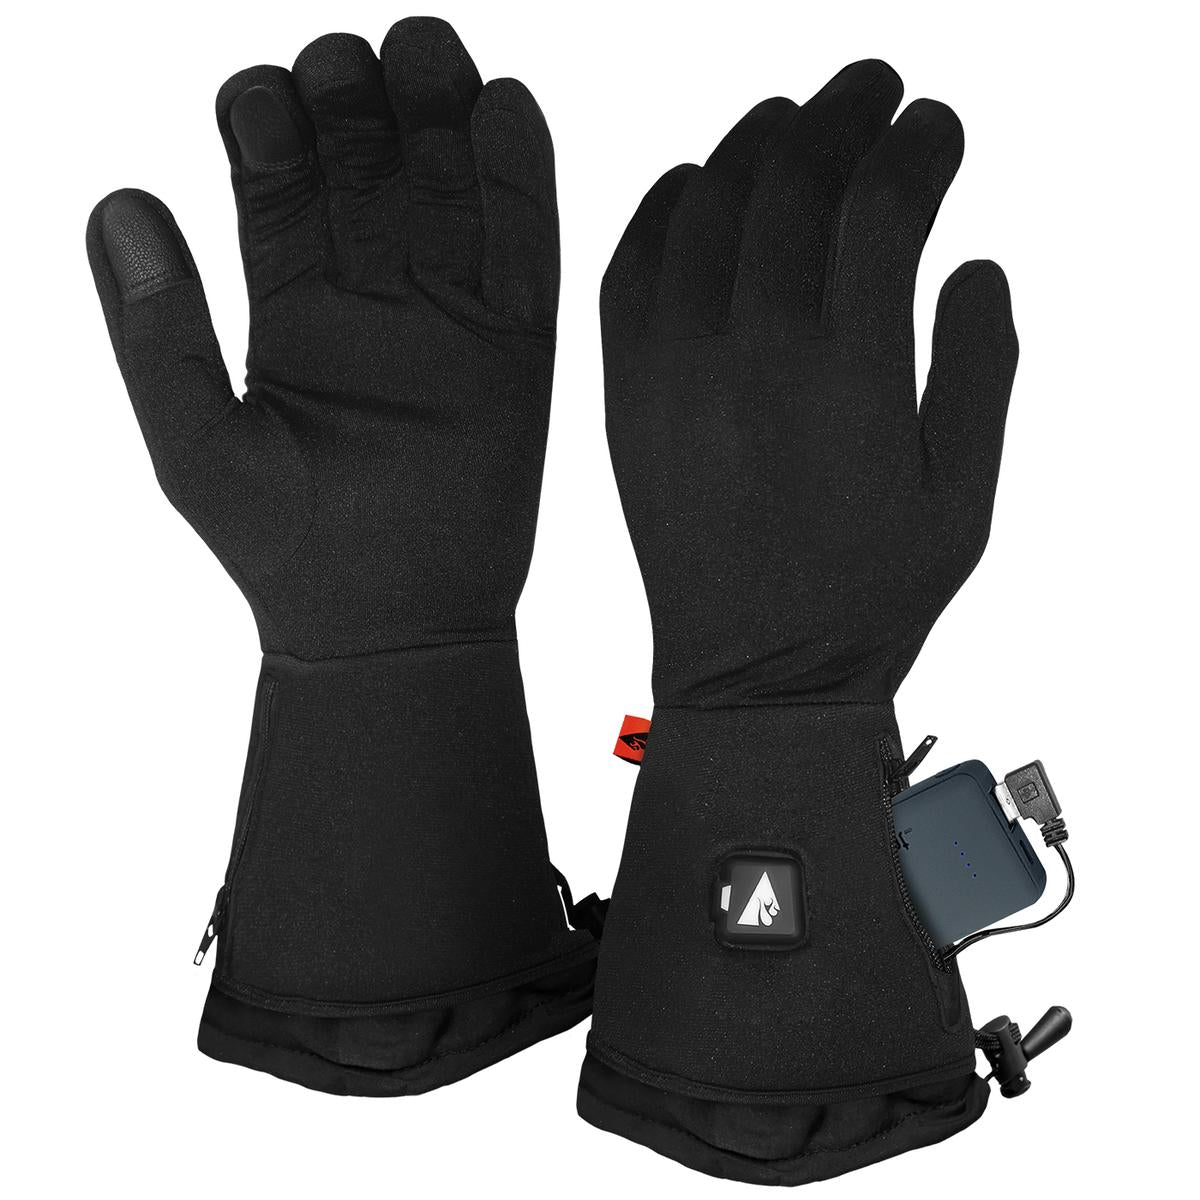 Under Armour Armour Liner Gloves, Black/Black, Medium, Gloves -   Canada